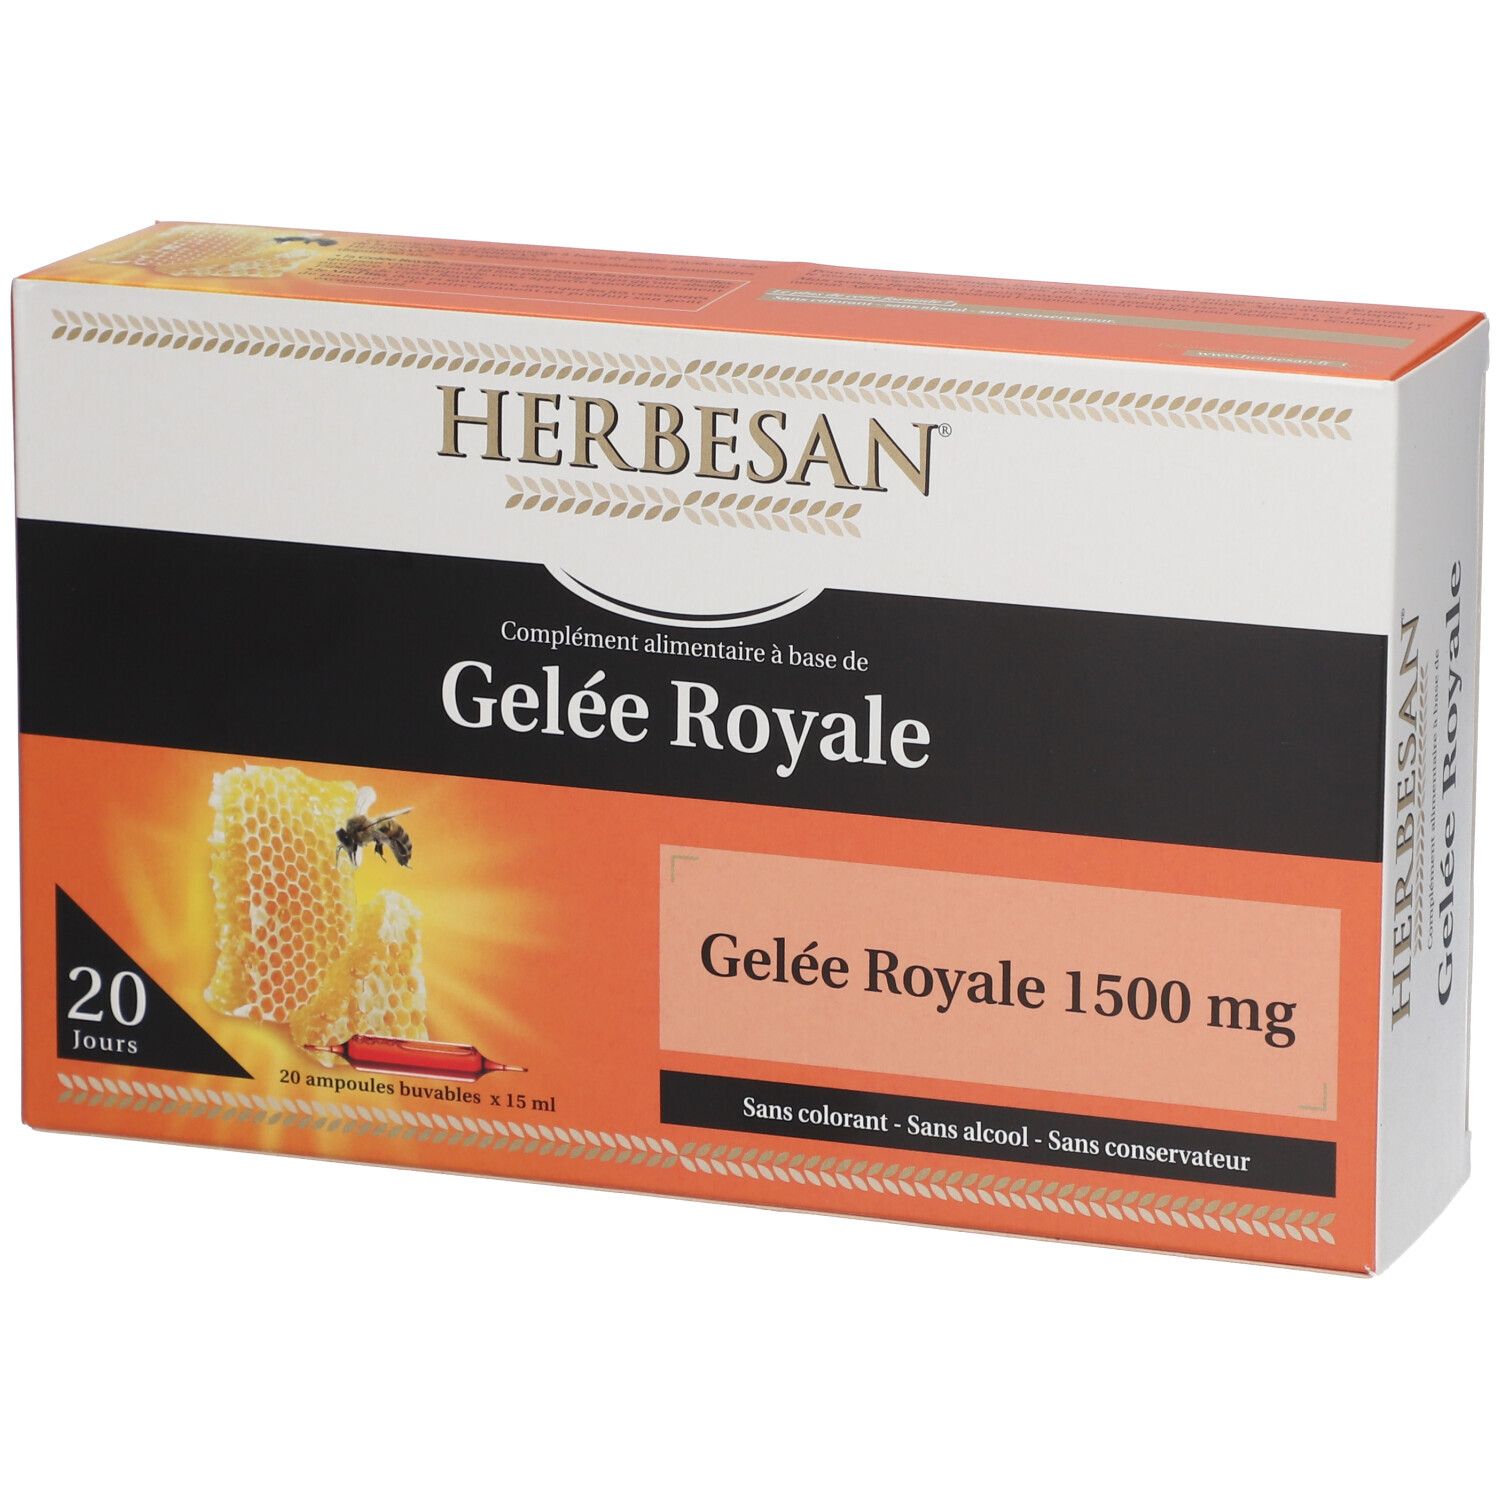 Herbesan® Gelée Royale 1500 mg Ampoule